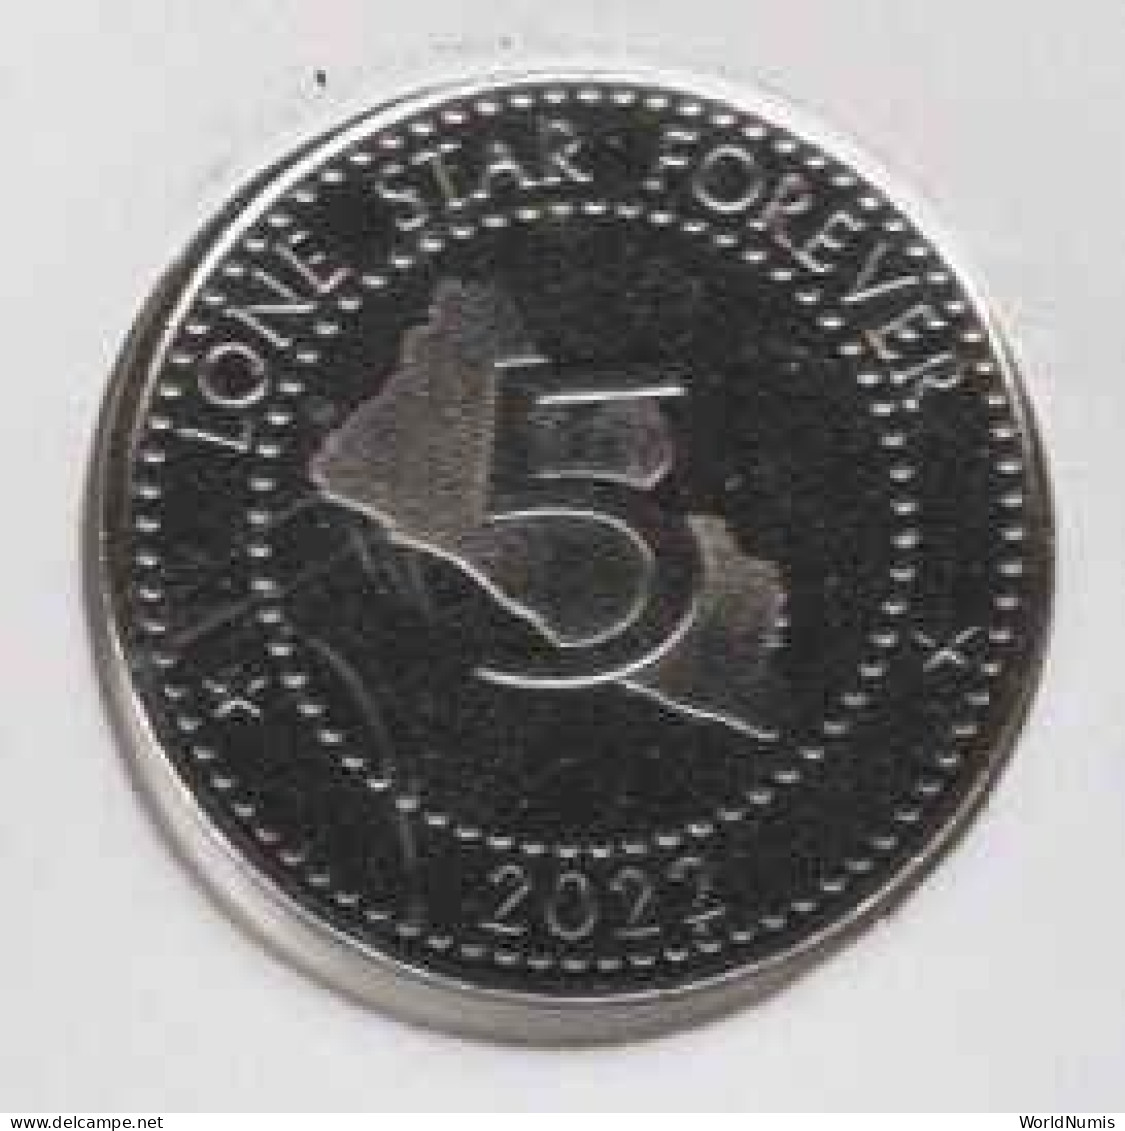 Liberia - 5 Dollars 2022 - Liberia